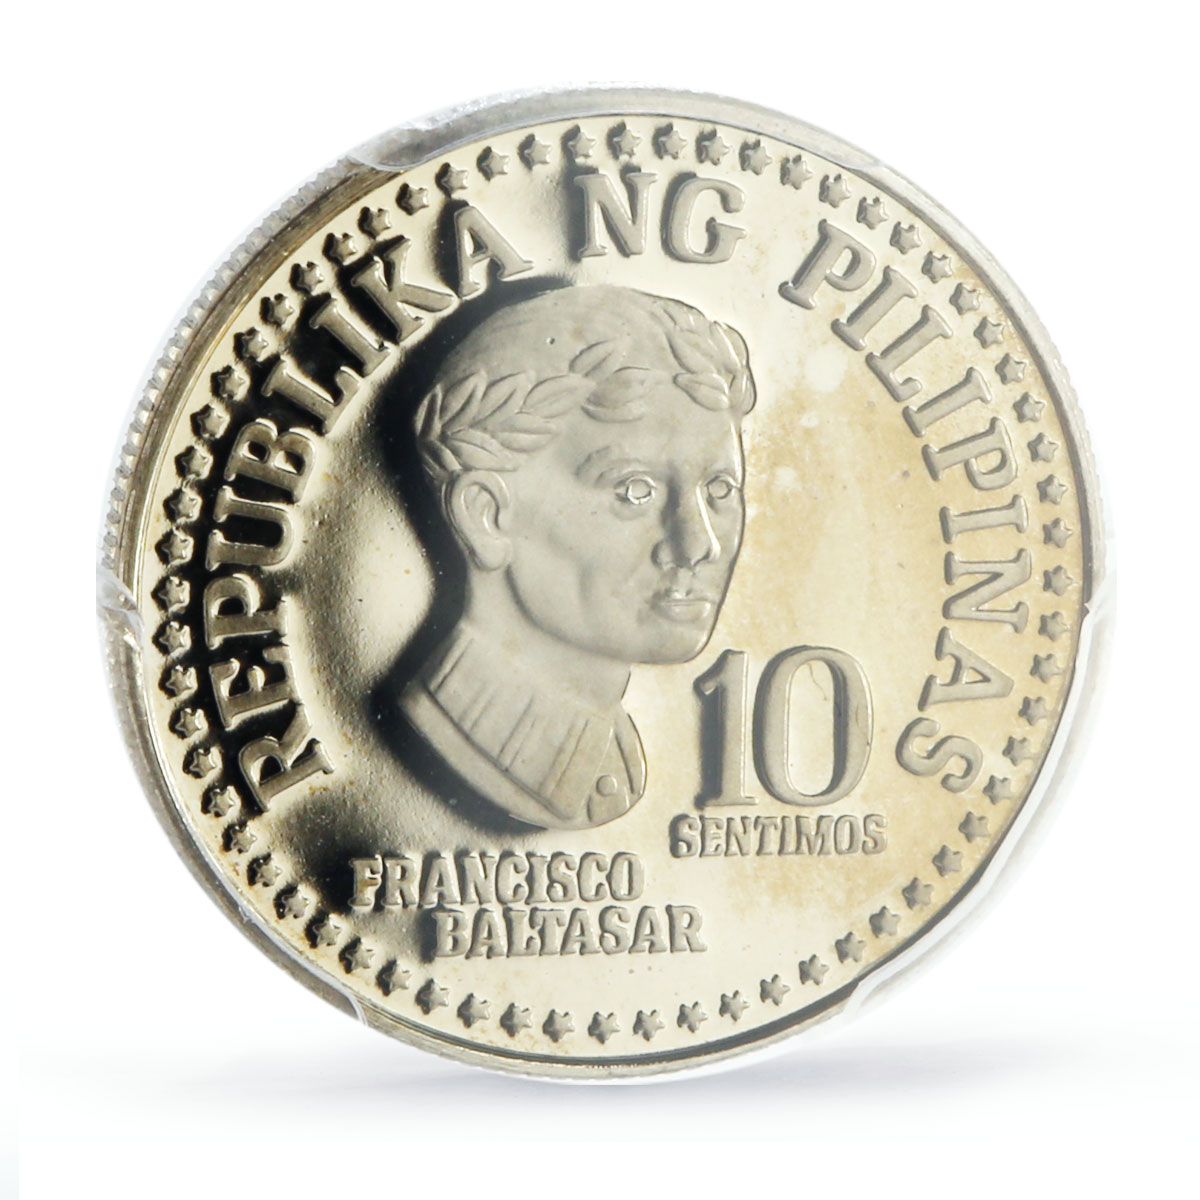 Philippines 10 sentimos Poet Francisco Baltasar KM-226 PR67 PCGS CuNi coin 1981